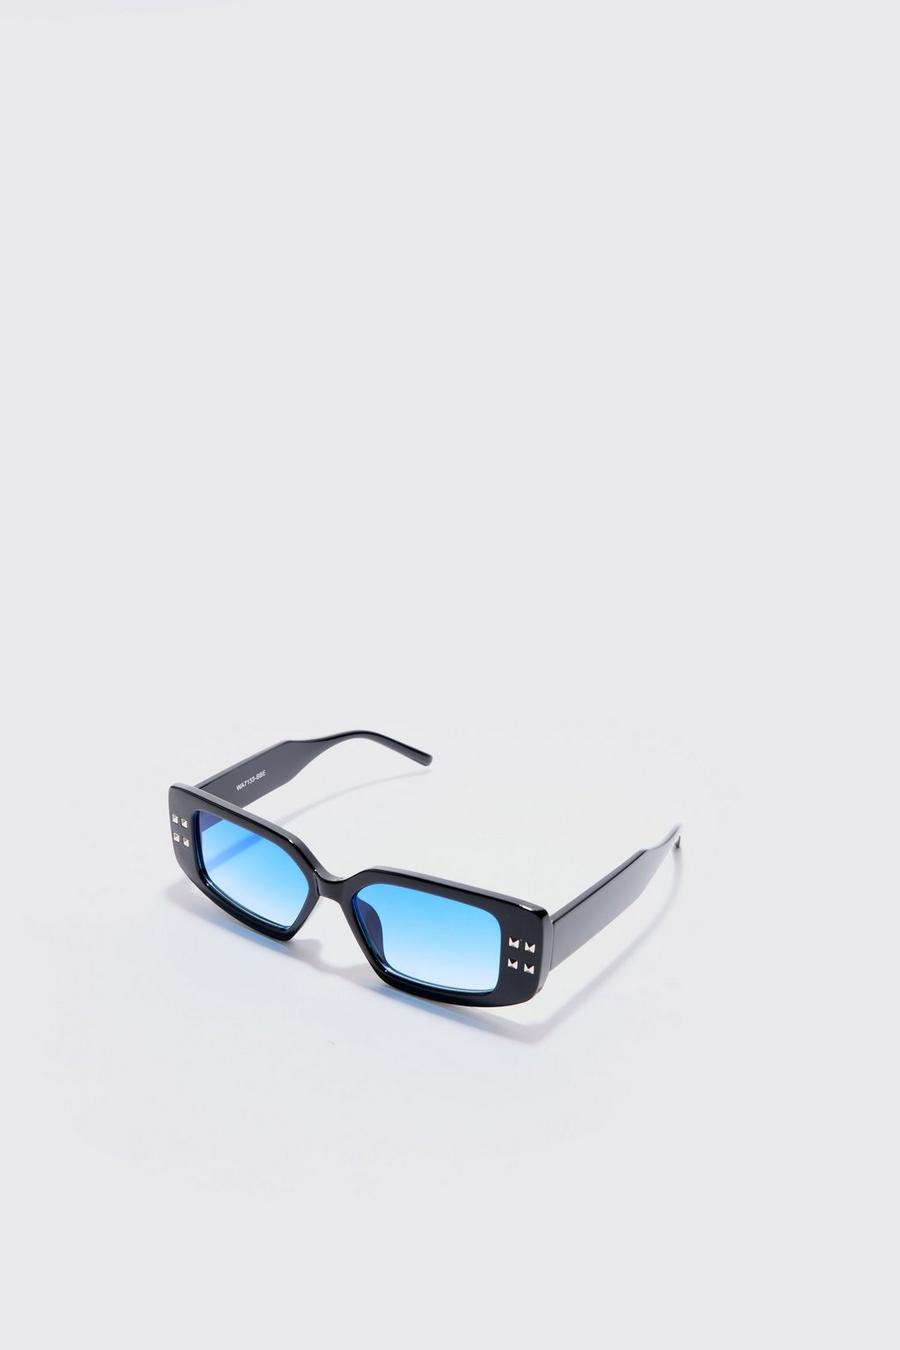 michael kors 59 mm salina aviator metal sunglasses